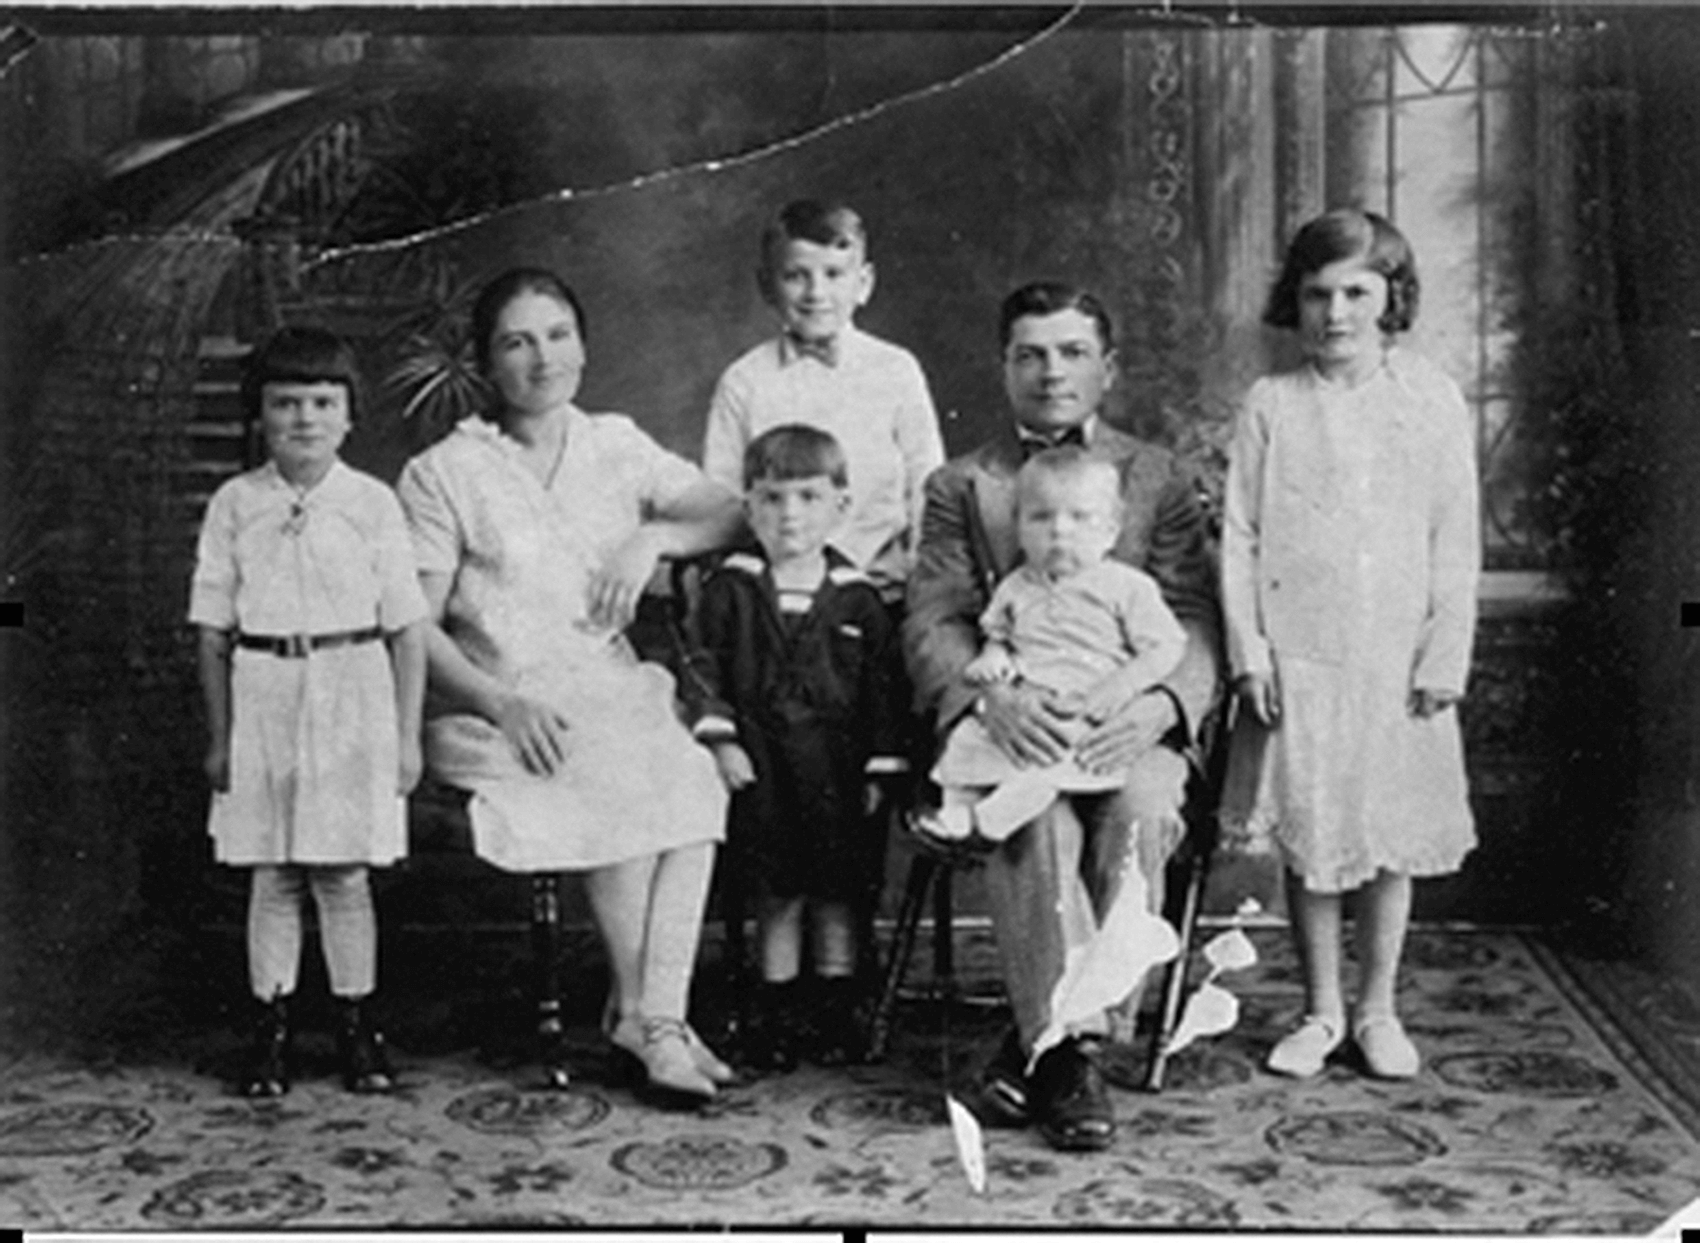 Louise Pecka Vallone's family